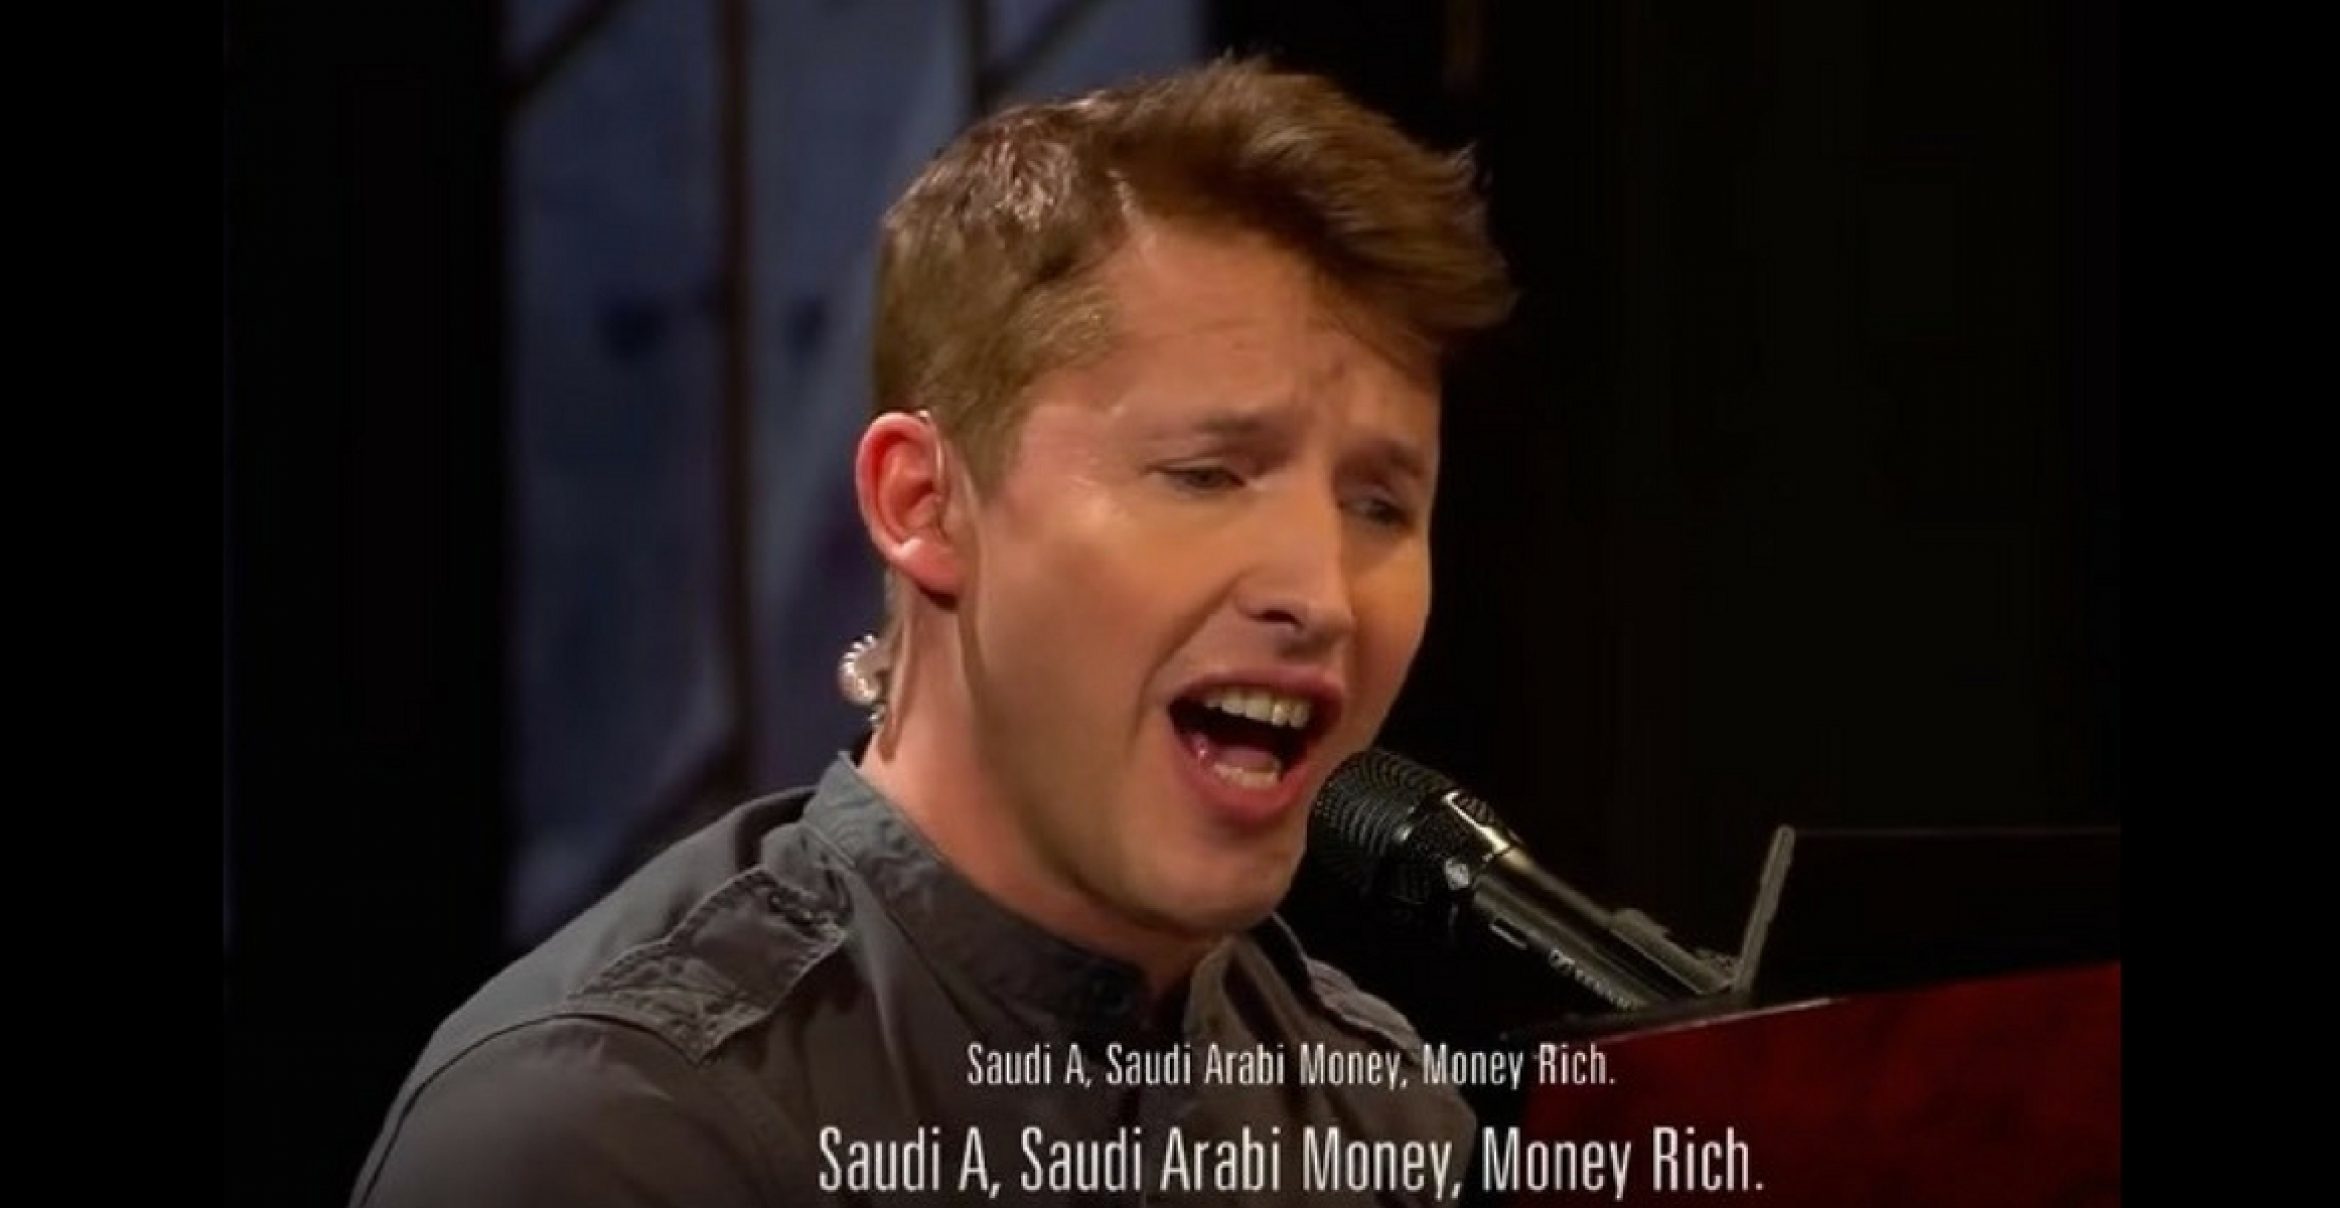 Neufassung: James Blunt singt Haftbefehls “Saudi Arabi Money Rich“